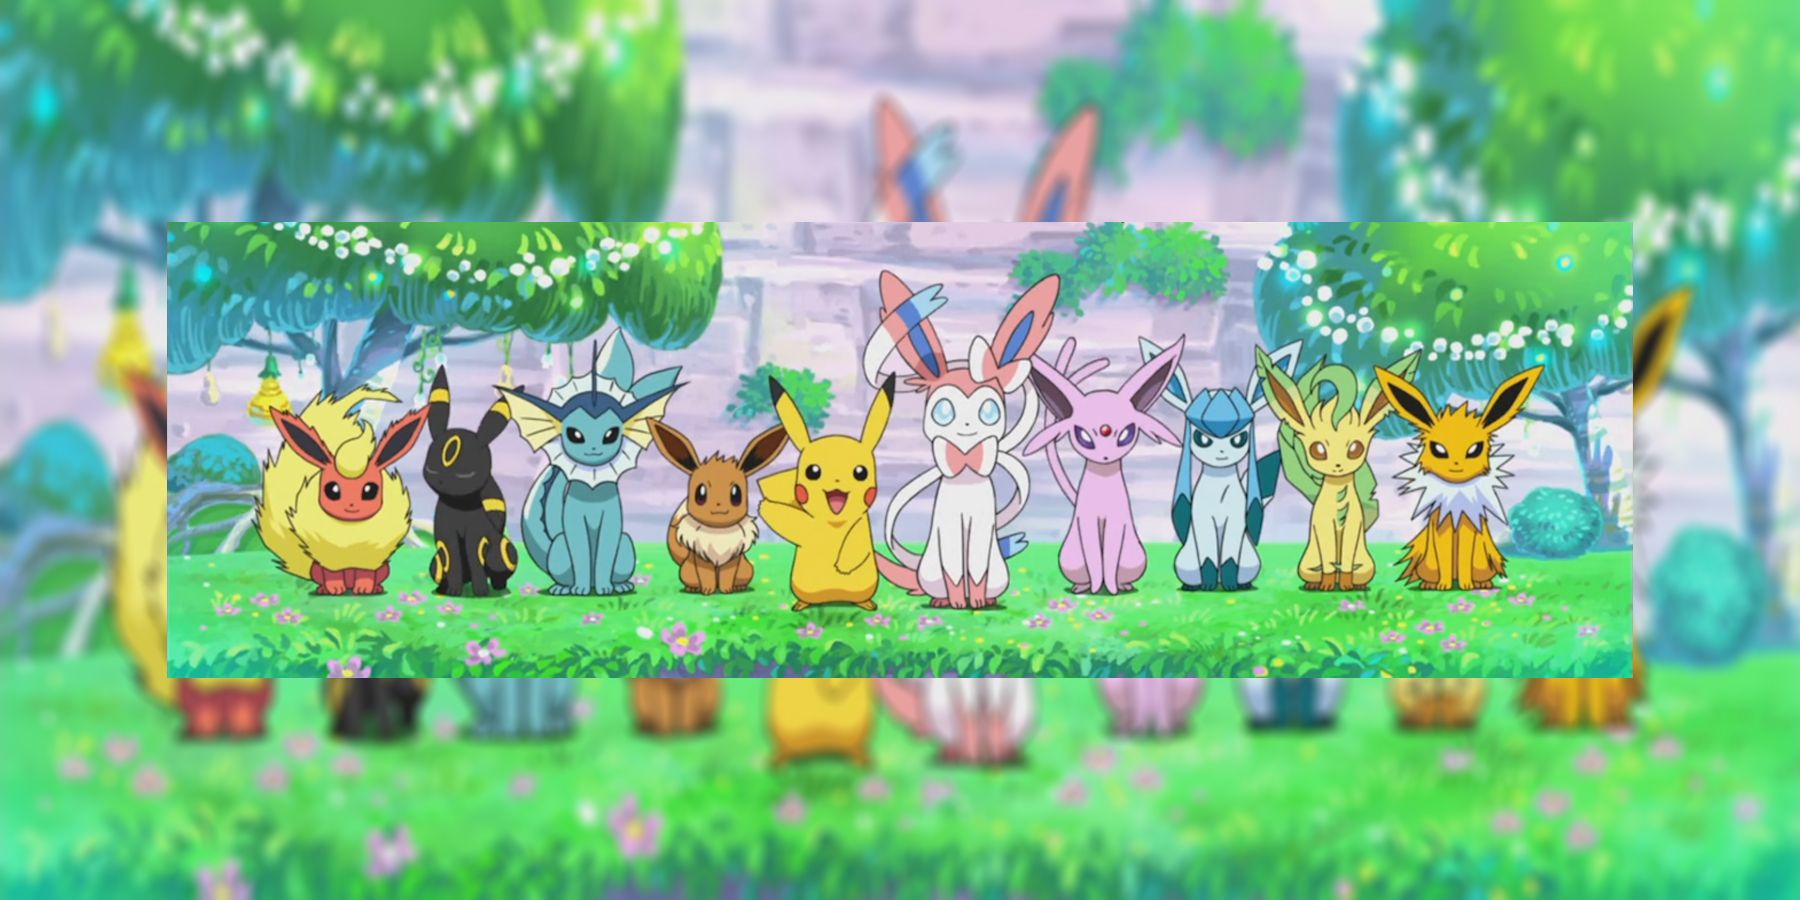 A h-uile sreath de Eevee Pikachu Pokemon